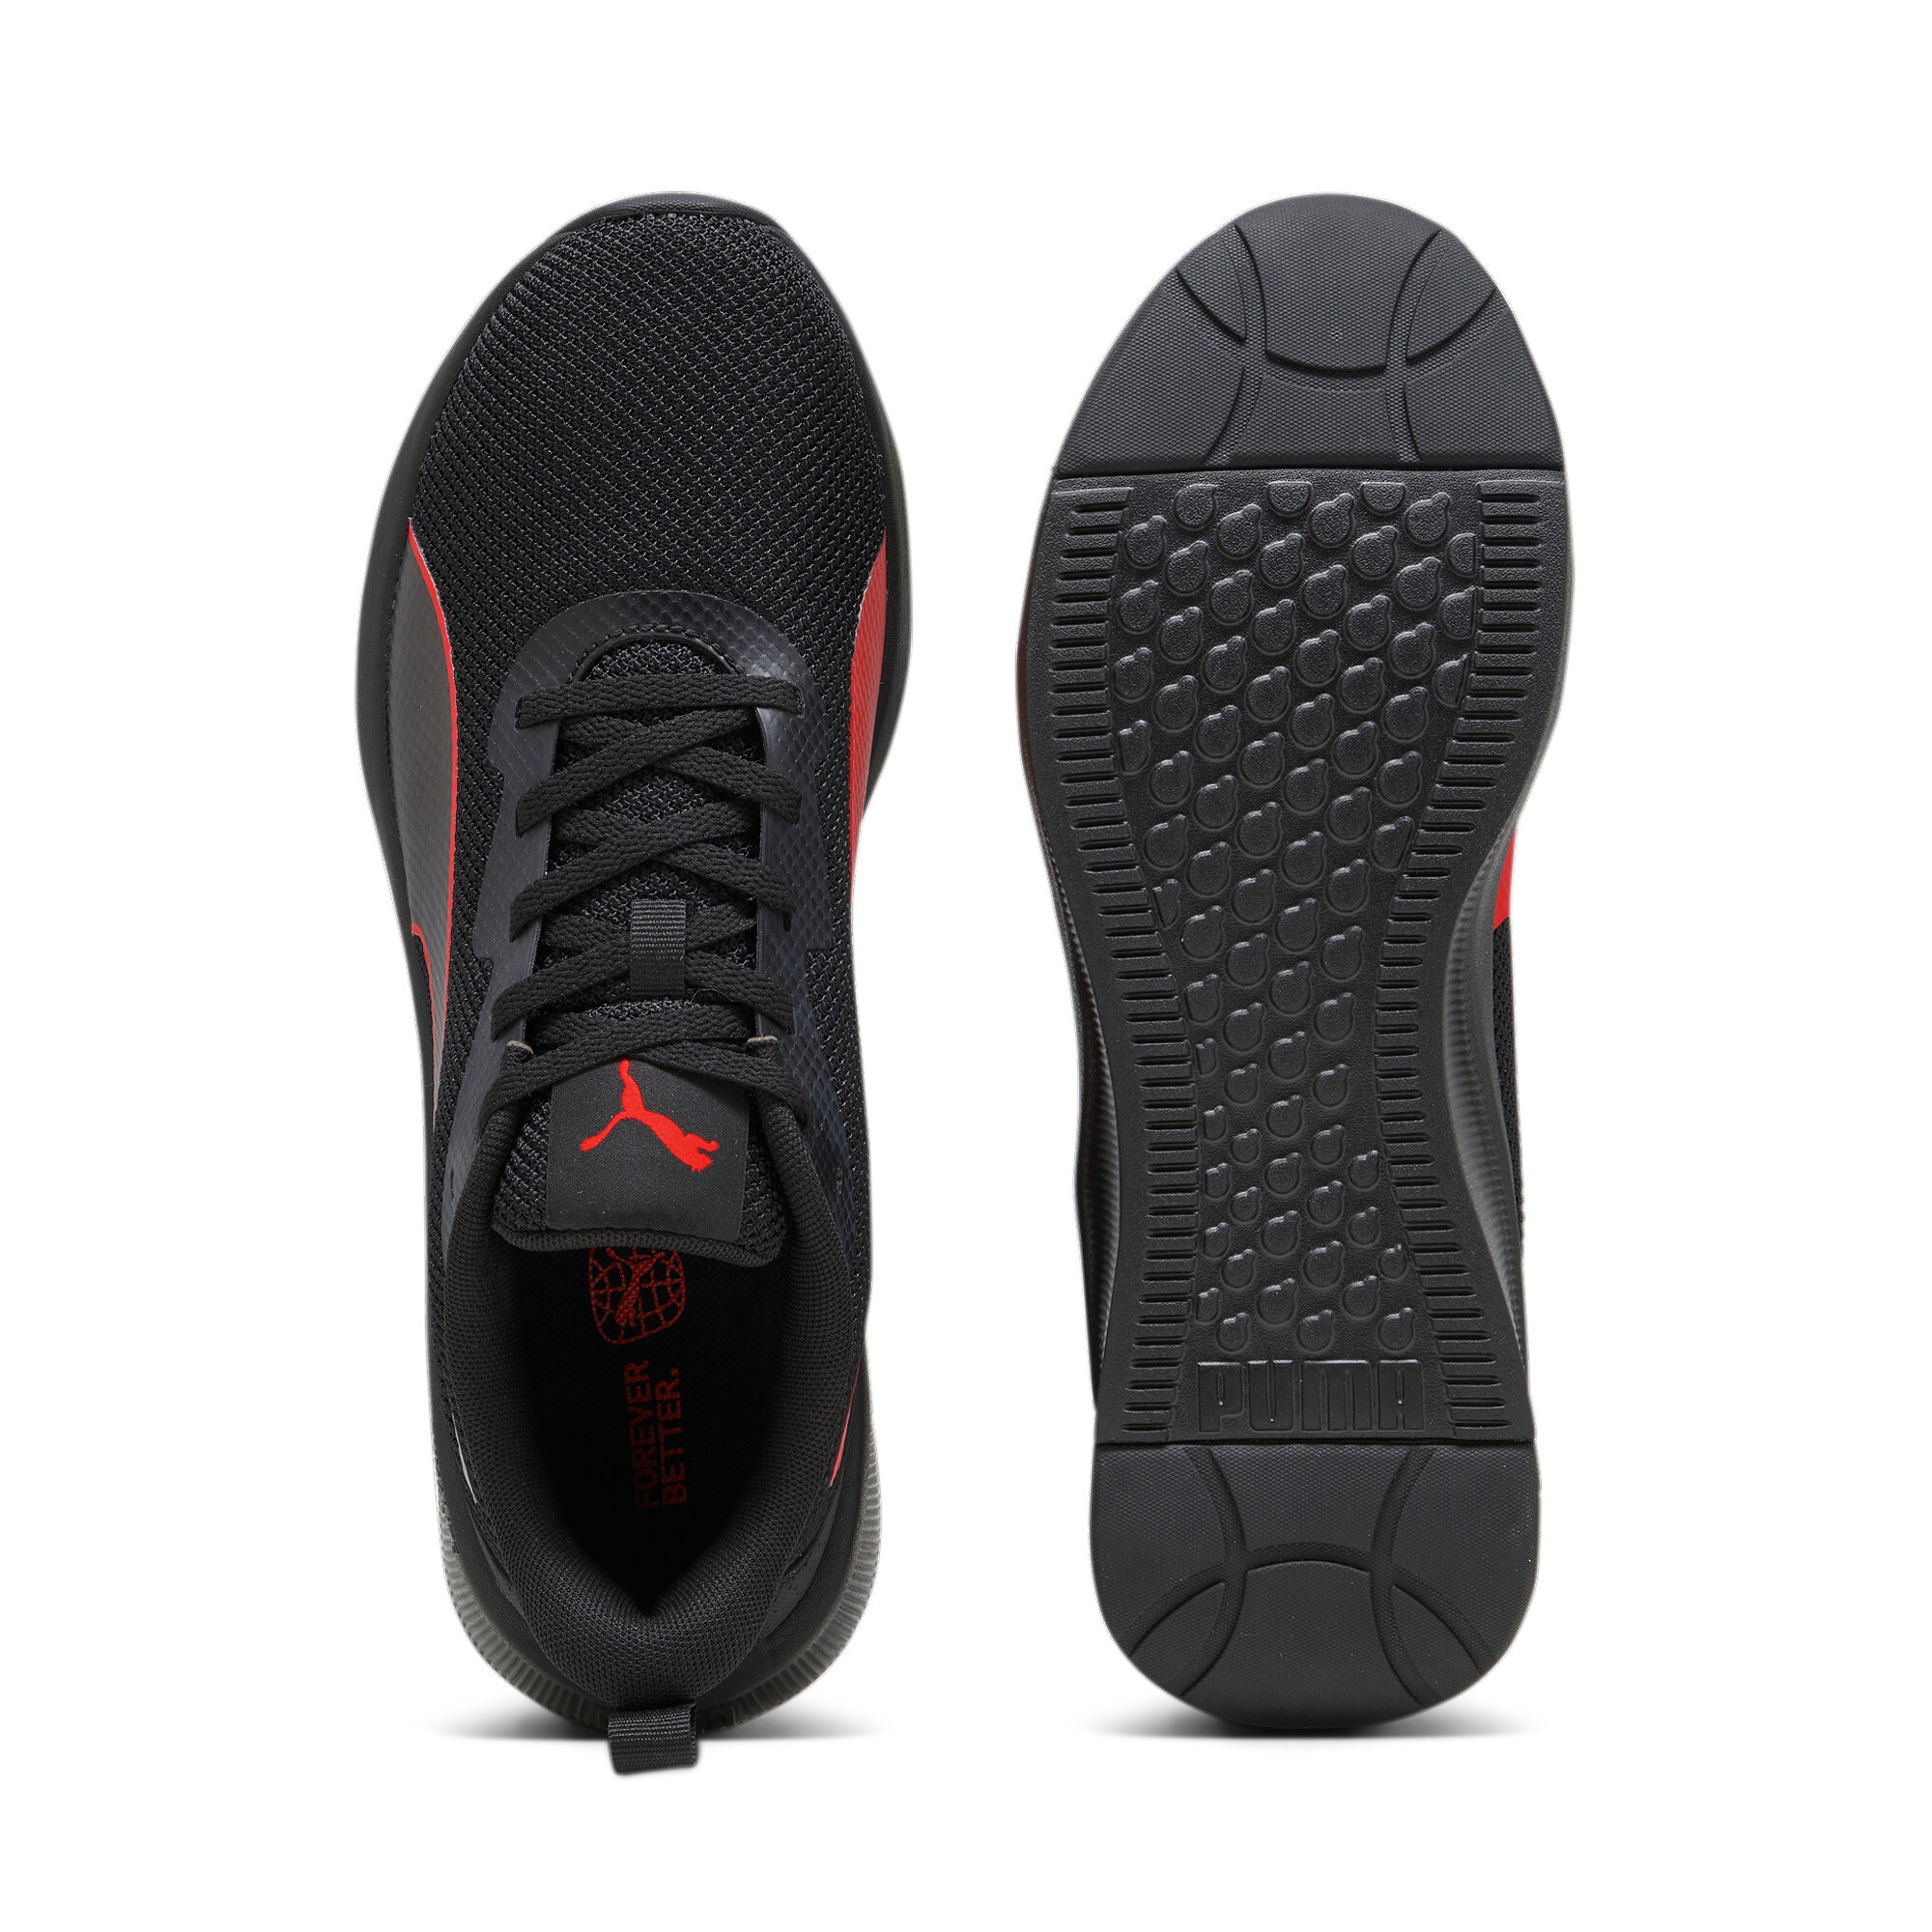 Men's PUMA Flyer Lite Mesh Running Shoes In Black, Size EU 43